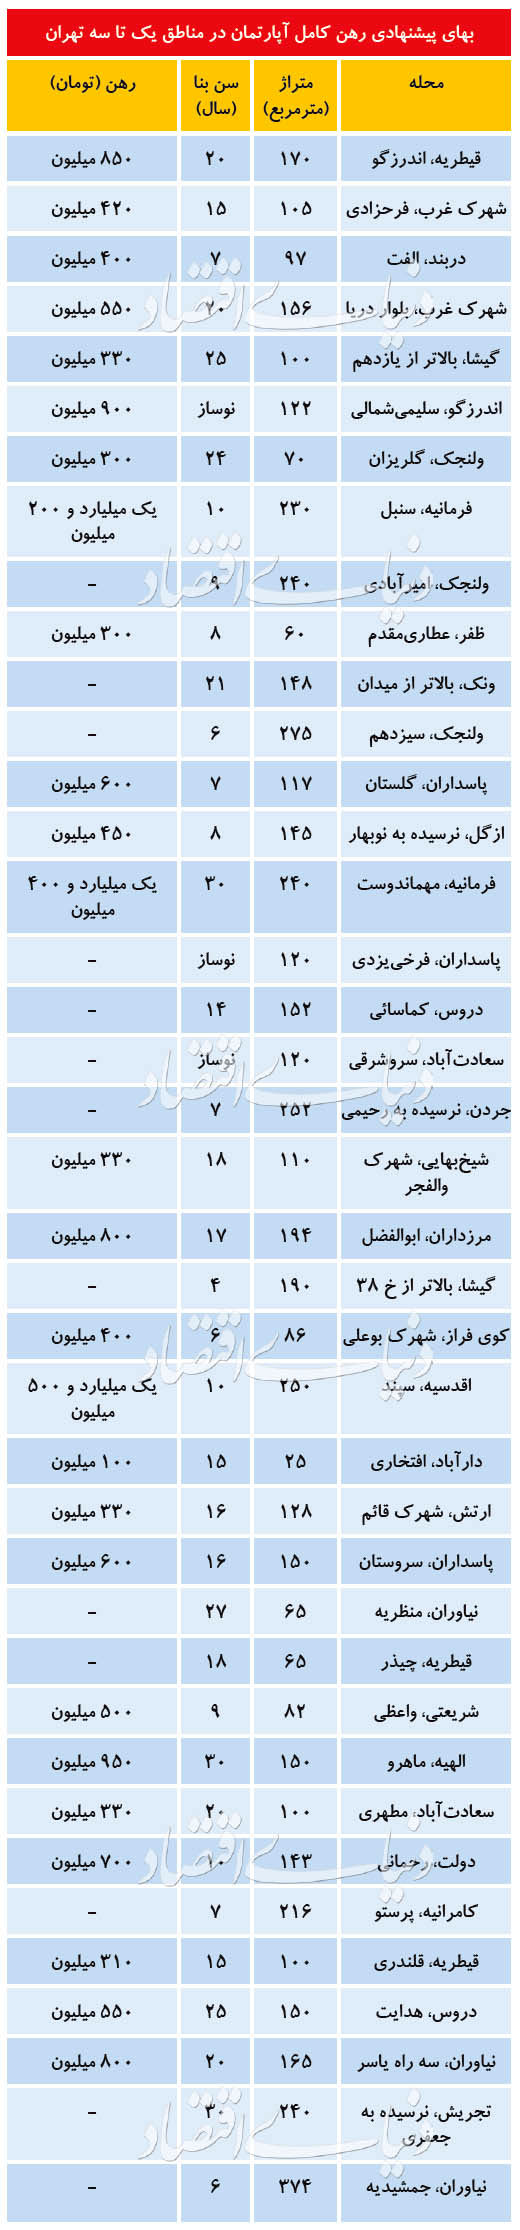 قیمت رهن آپارتمان در "مناطق ۱ تا ۳" تهران